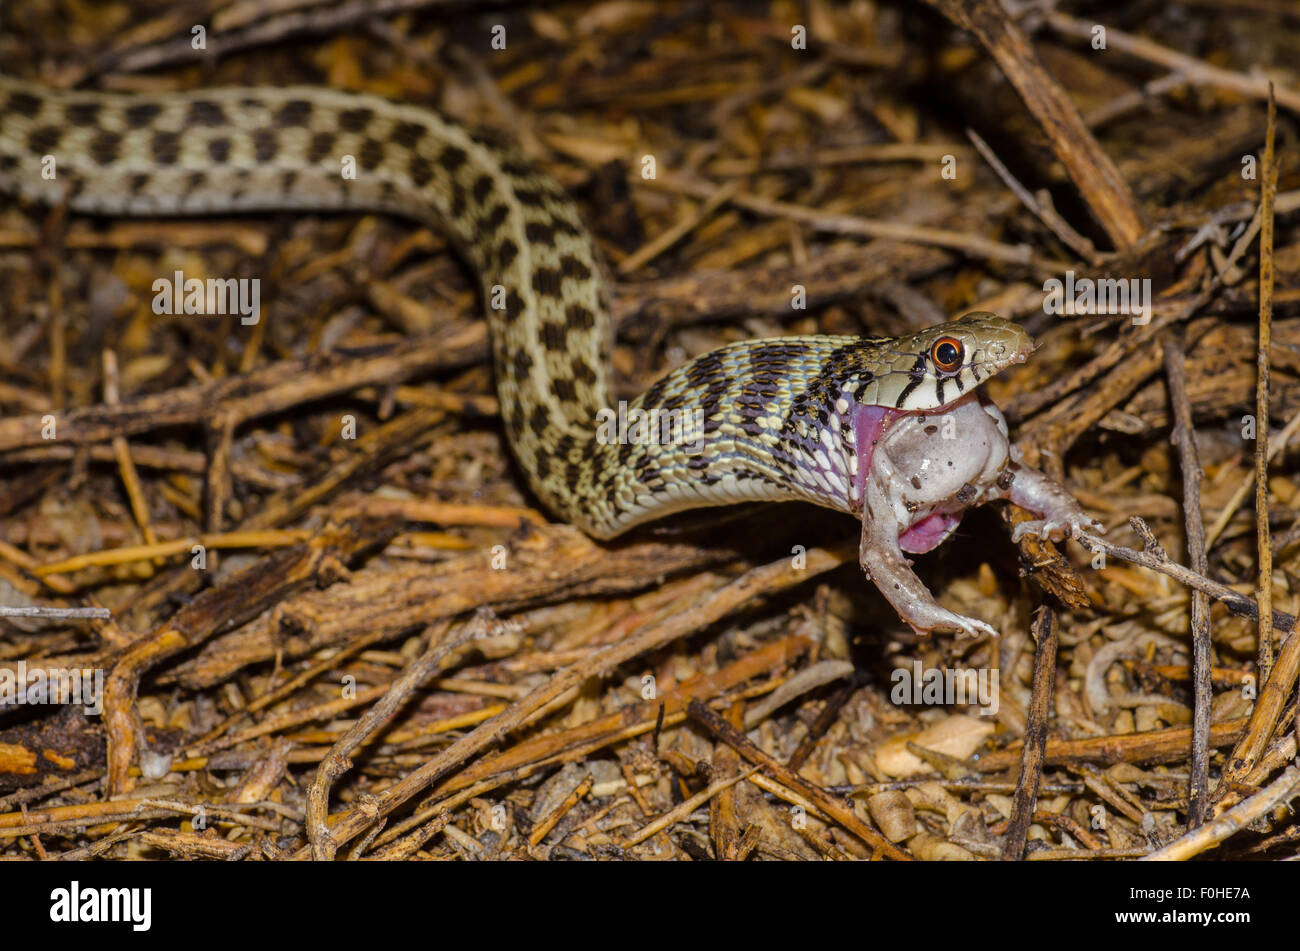 Giarrettiera a scacchi Snake, (thamnophis marcianus marcianus), mangiando un deserto del Chihuahuan Spadefoot, (Spea multiplicata stagnalis). Foto Stock